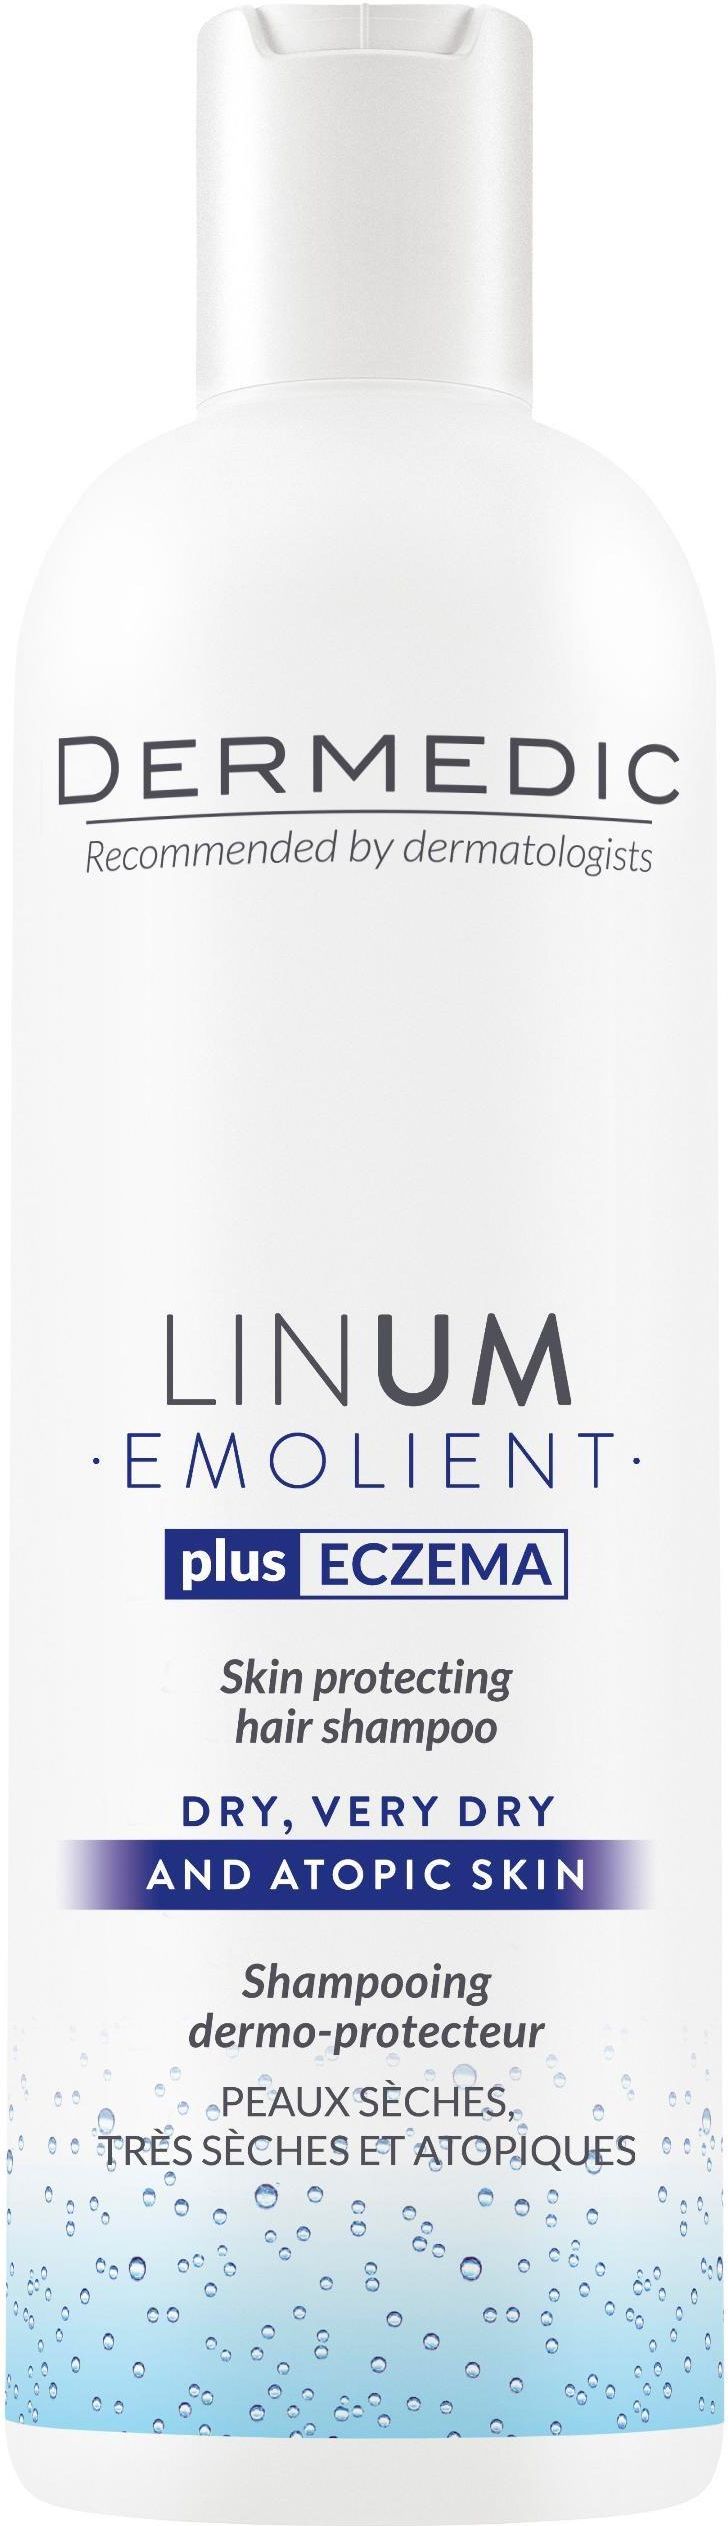 dermedic szampon linum ceneo